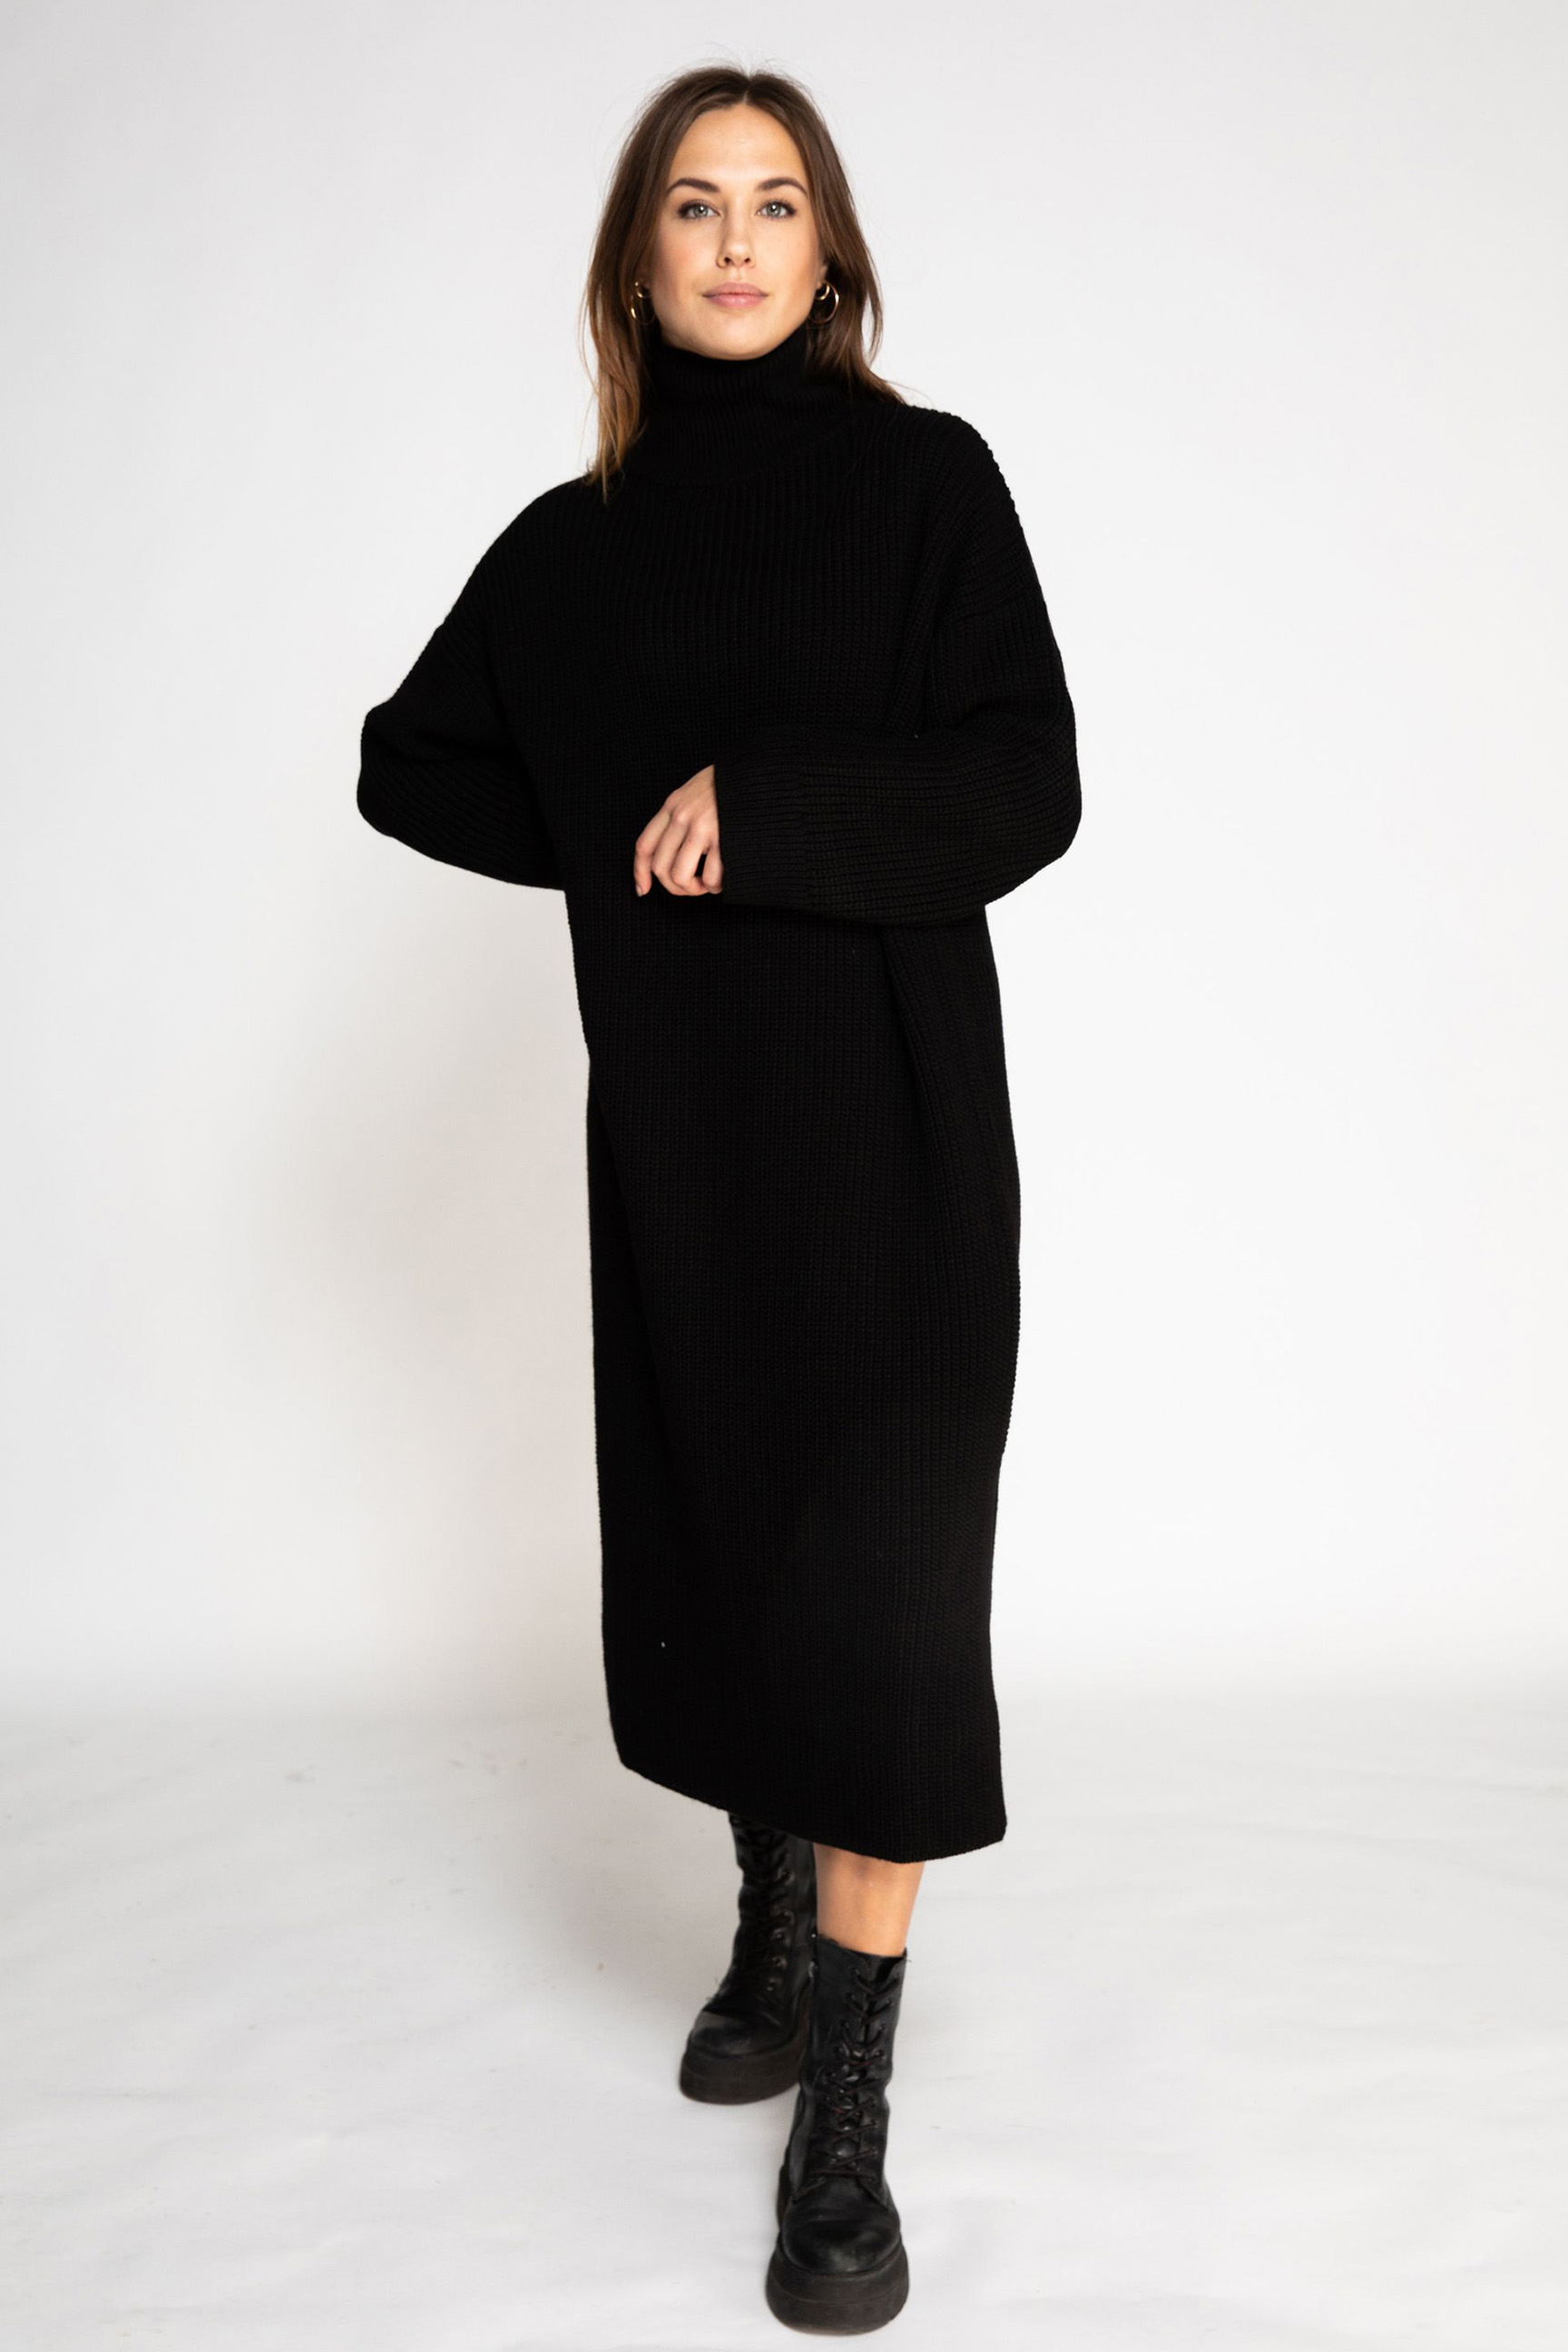 Langarm ZHRILL N9720 Fashion Smilla black Tayler | Female-Pullover,